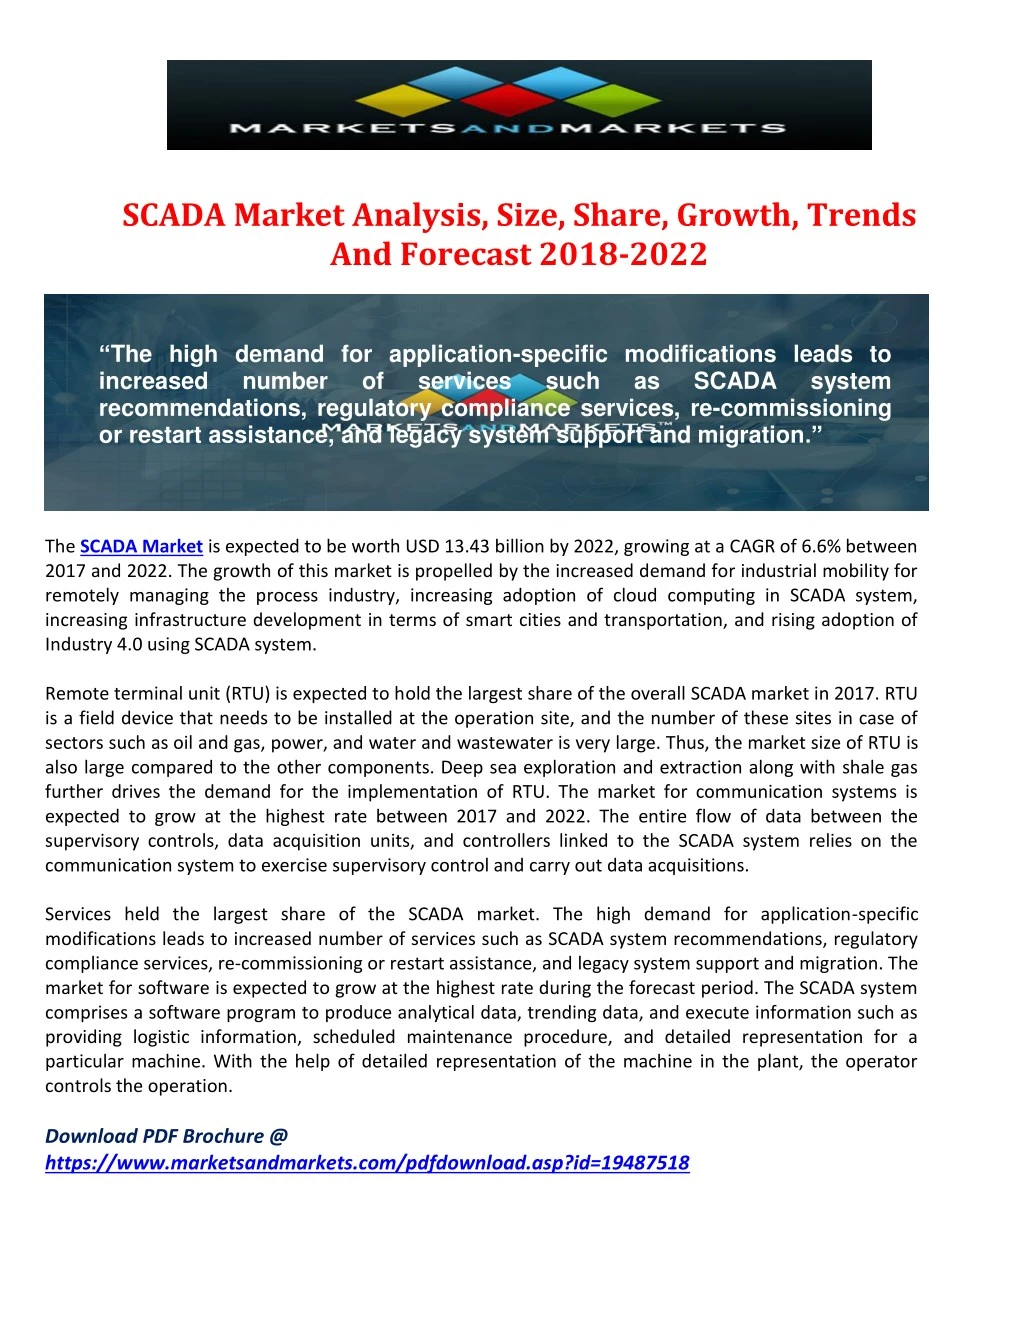 scada market analysis size share growth trends